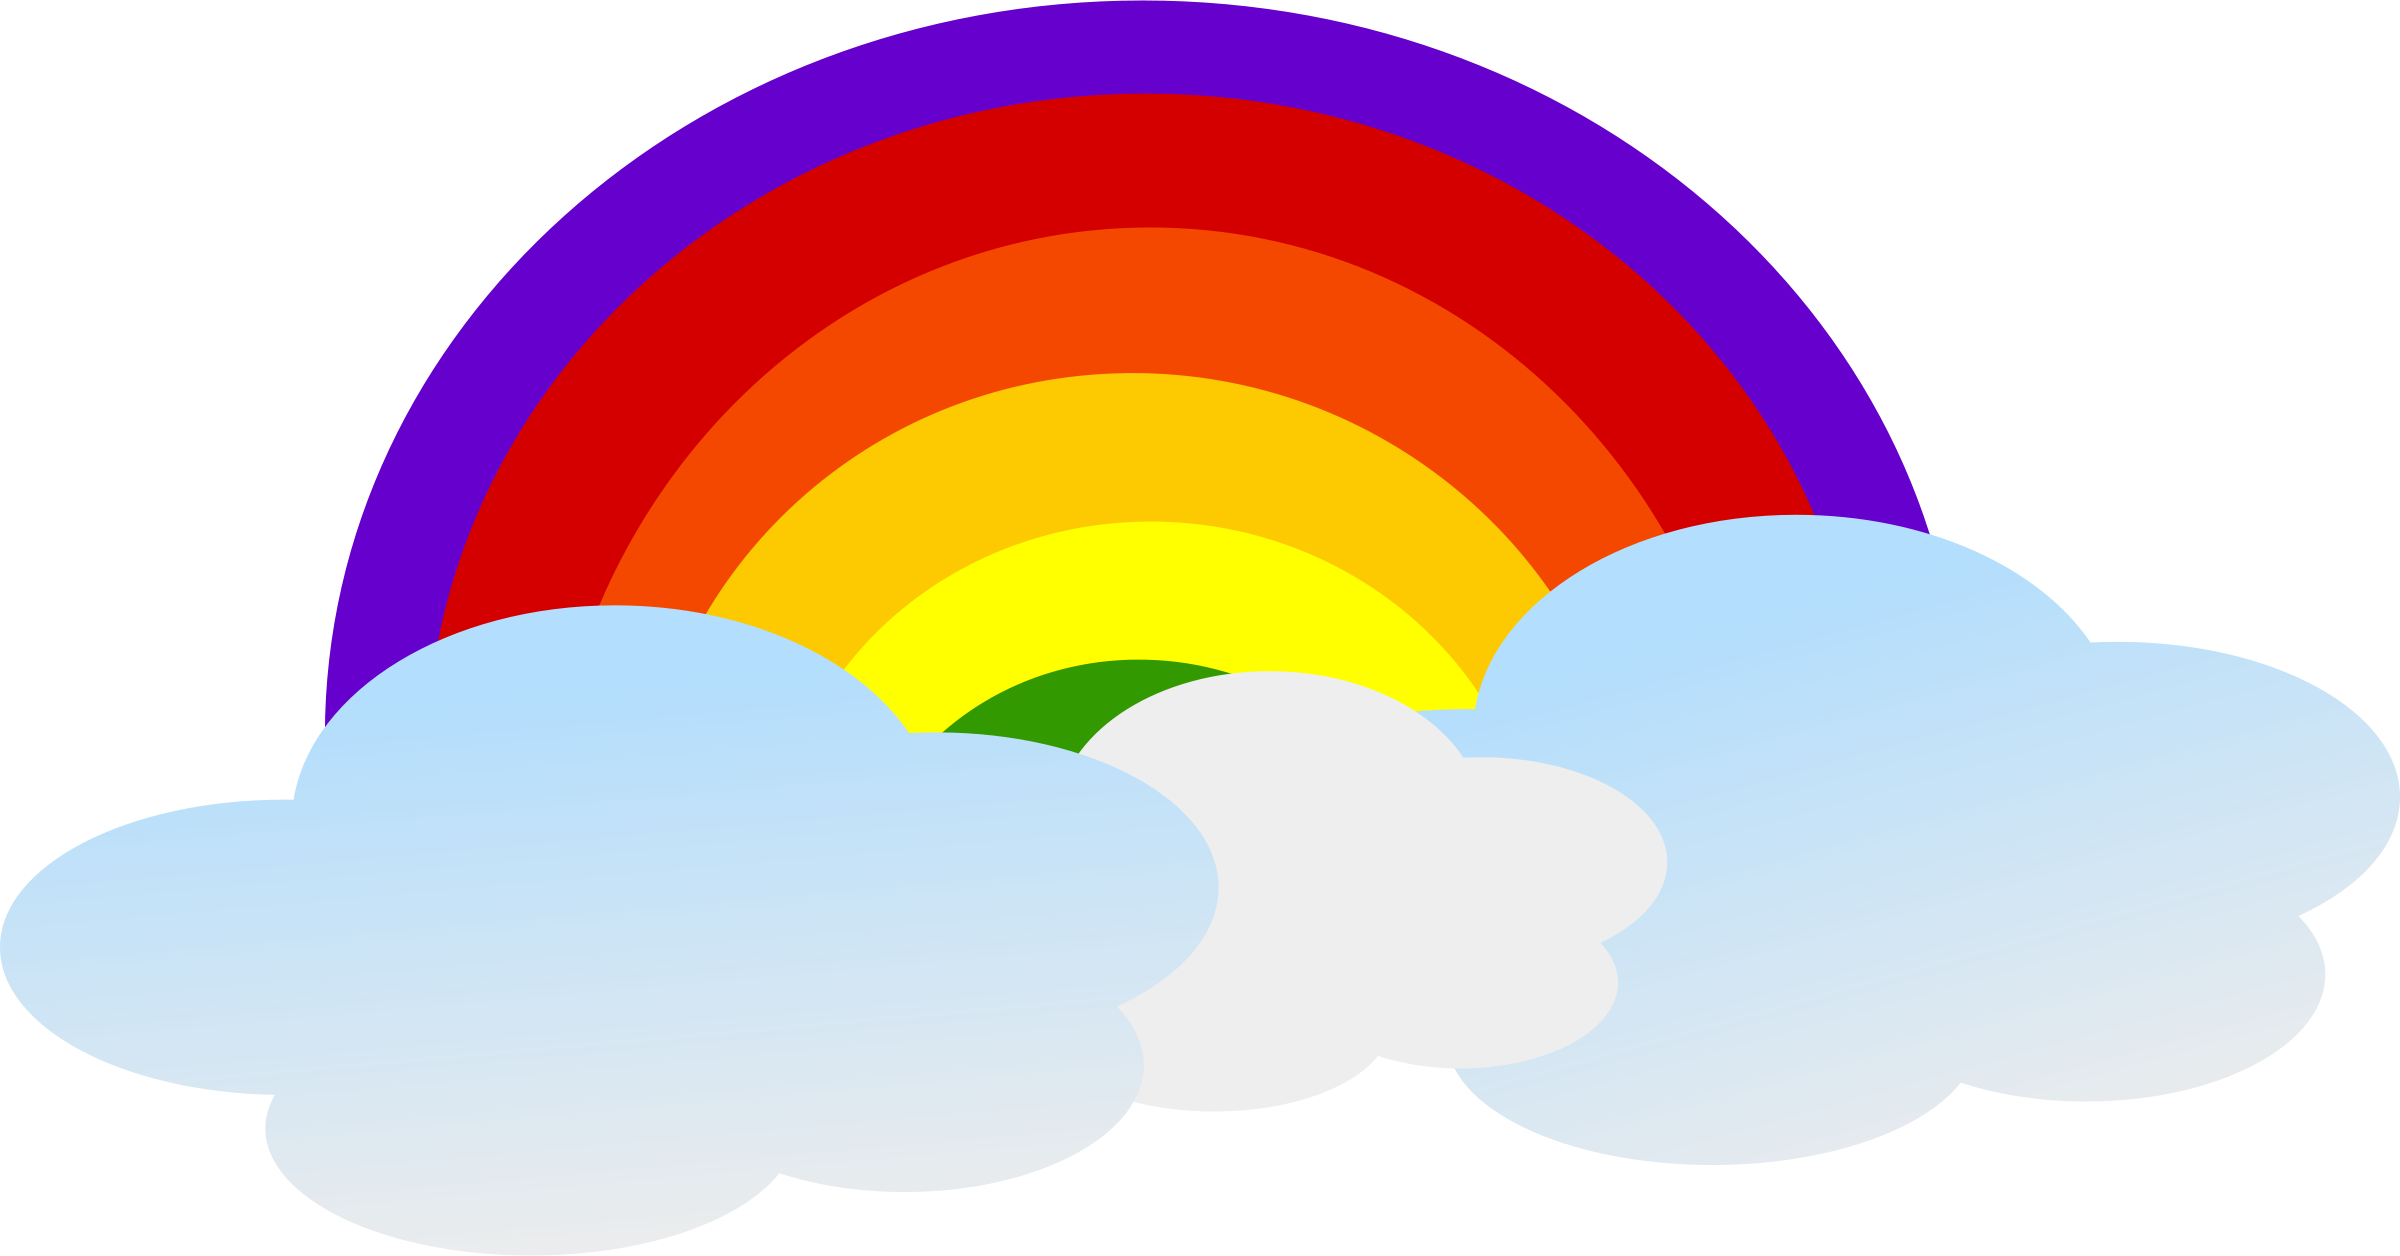 Rainbow clip art rainbow images clipartix 2